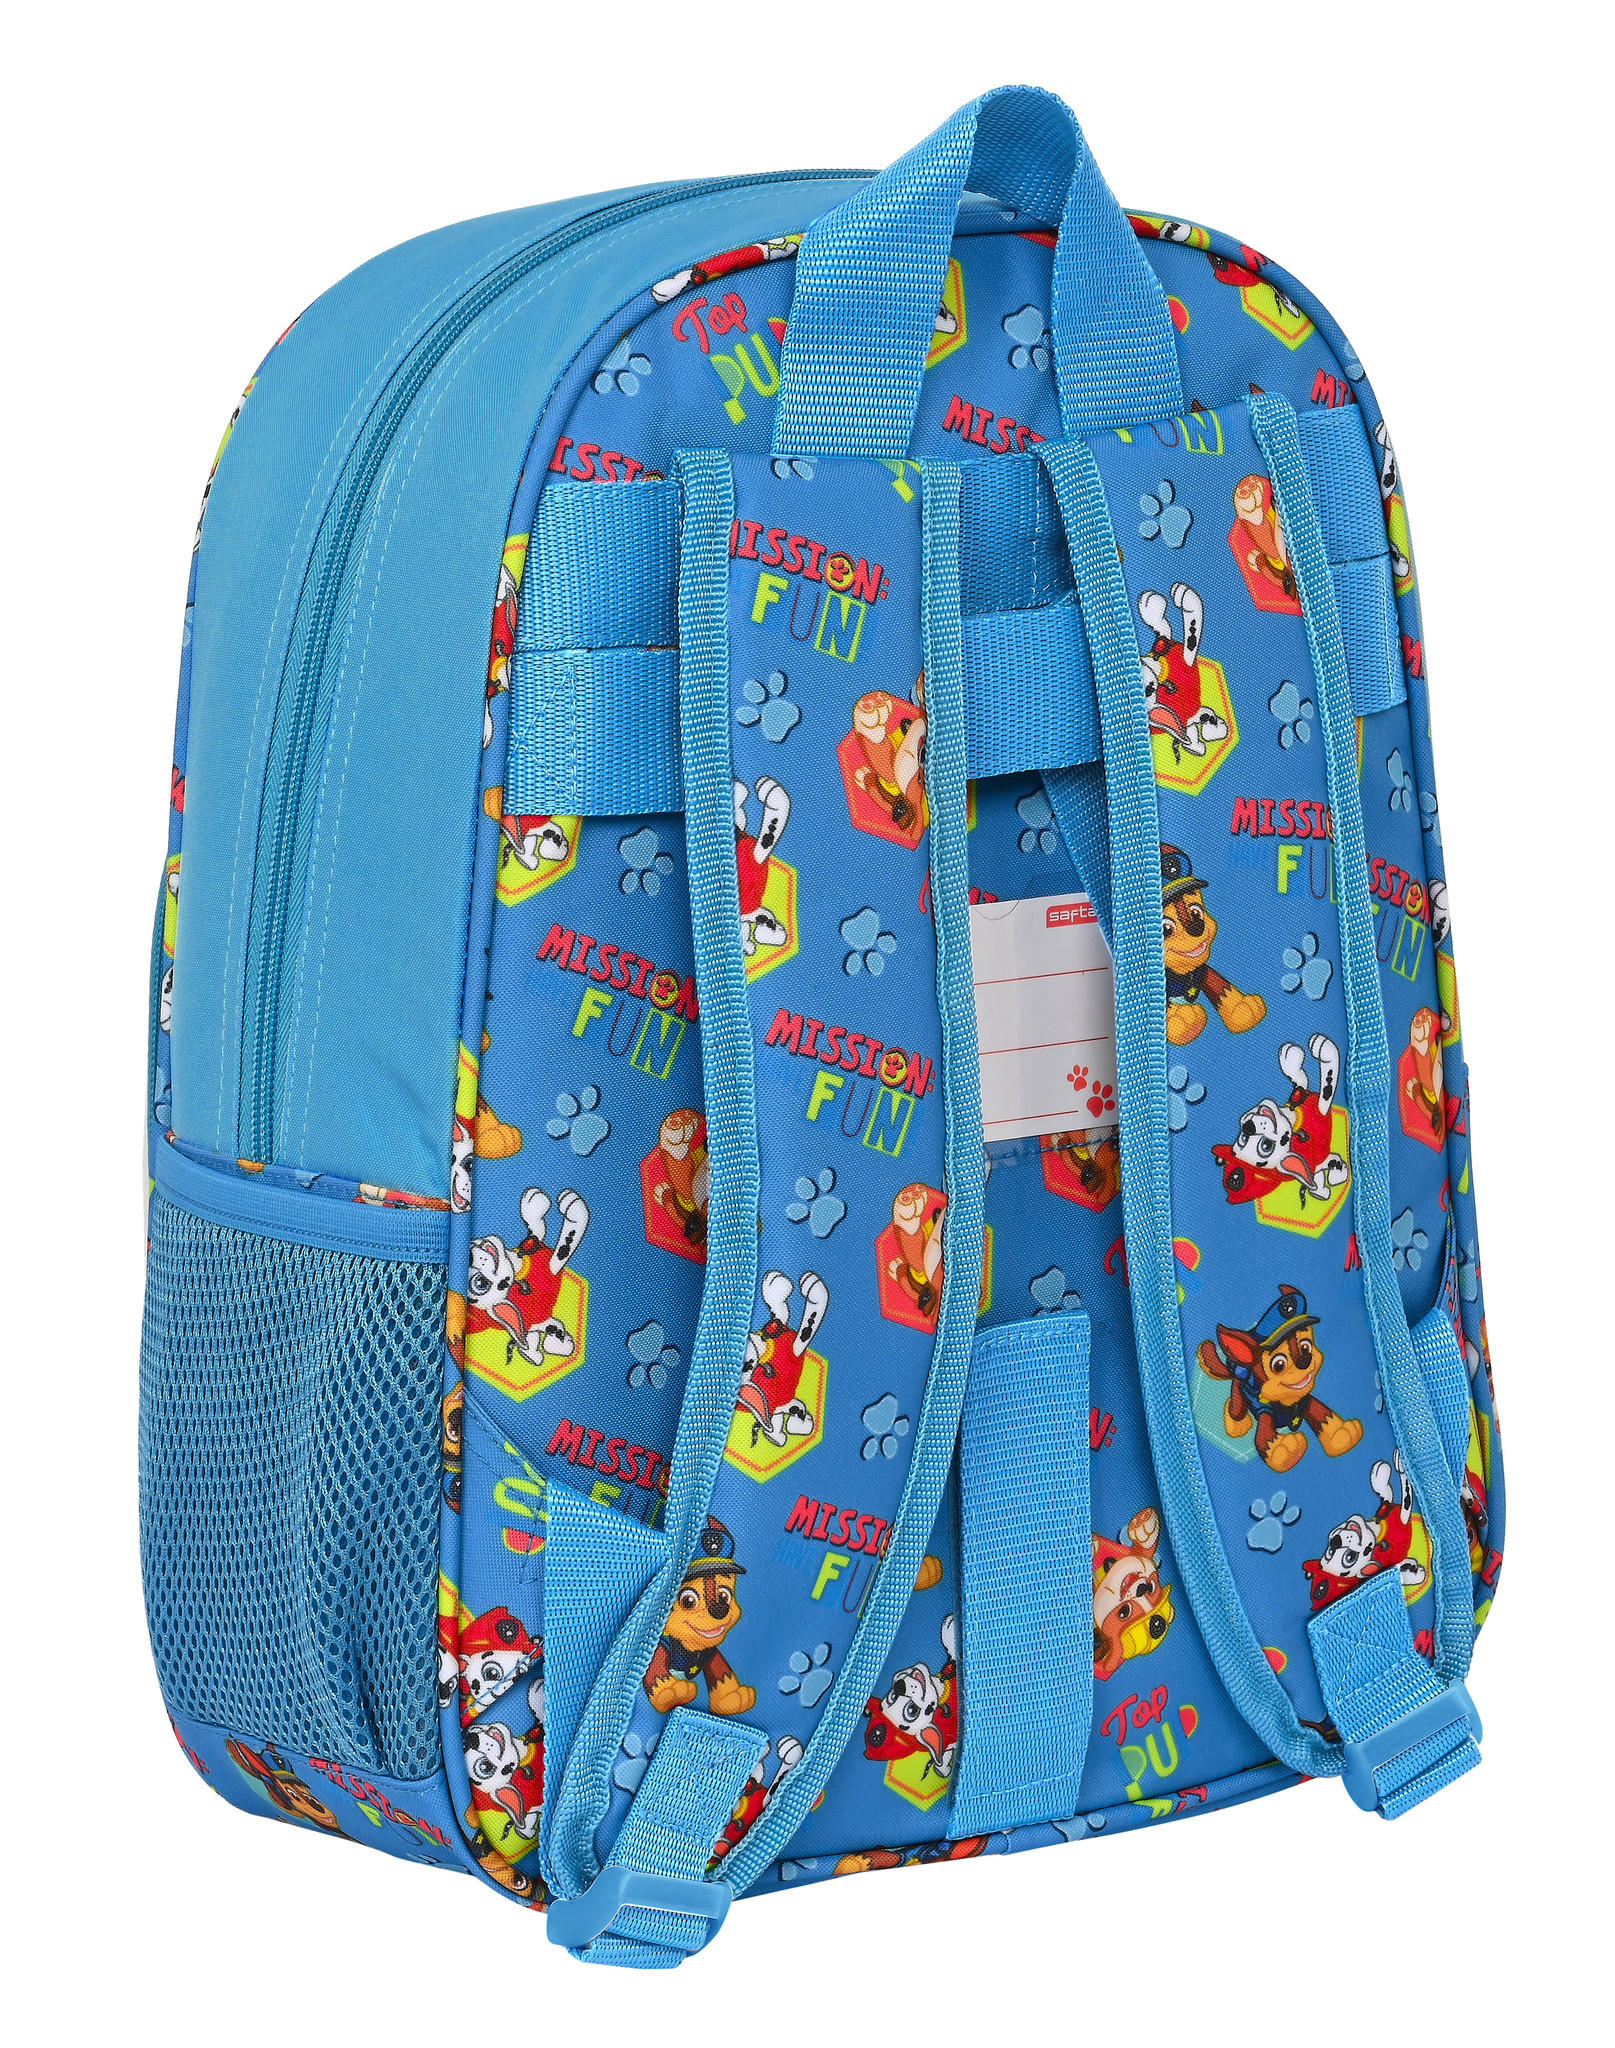 Paw Patrol Backpack Friendship - 34 x 26 x 11 cm - Polyester